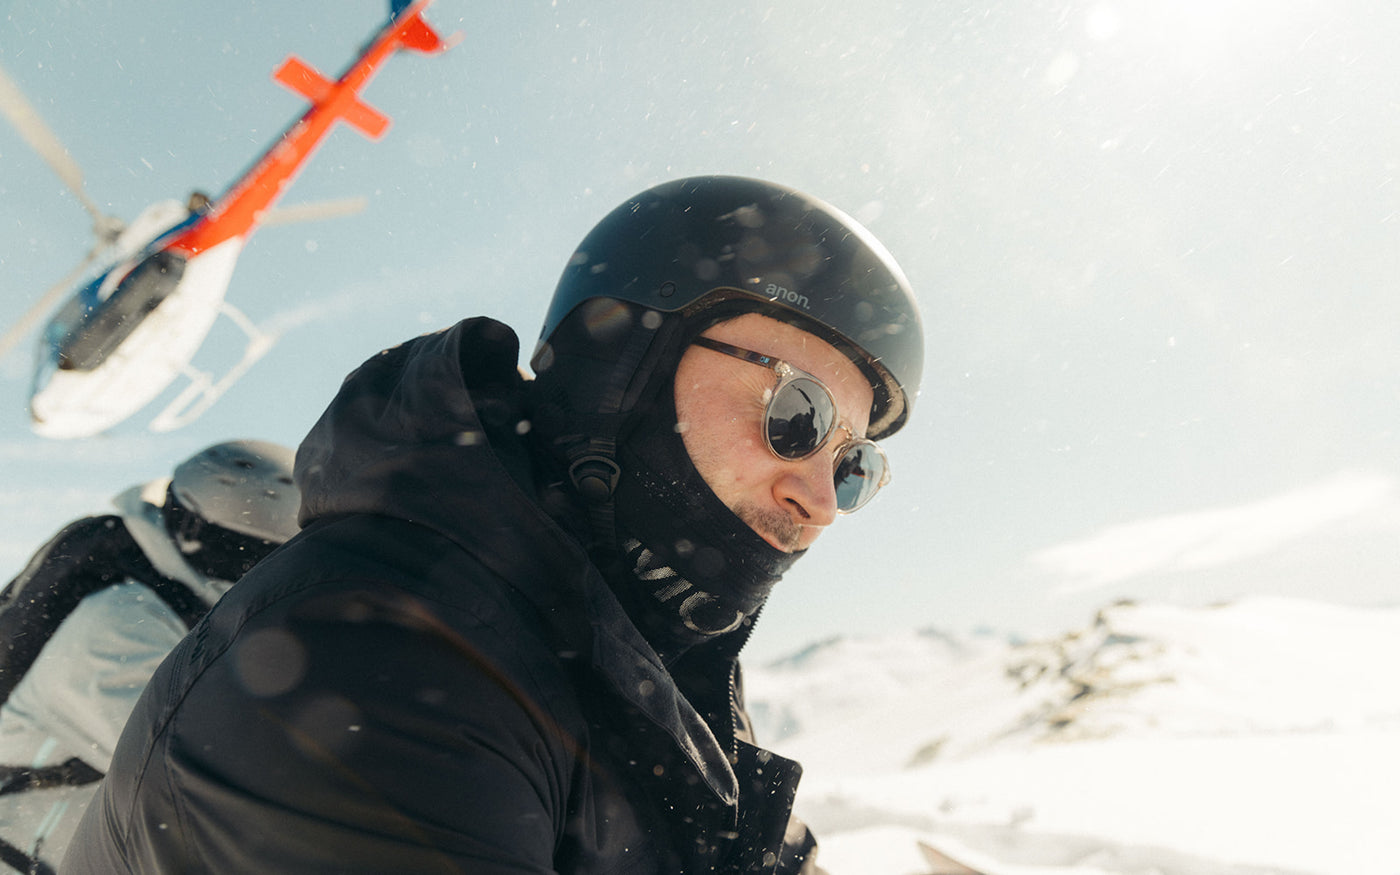 Man with a helmet on in a snow storm wearing OTIS eyewear scratch resistant sunglasses